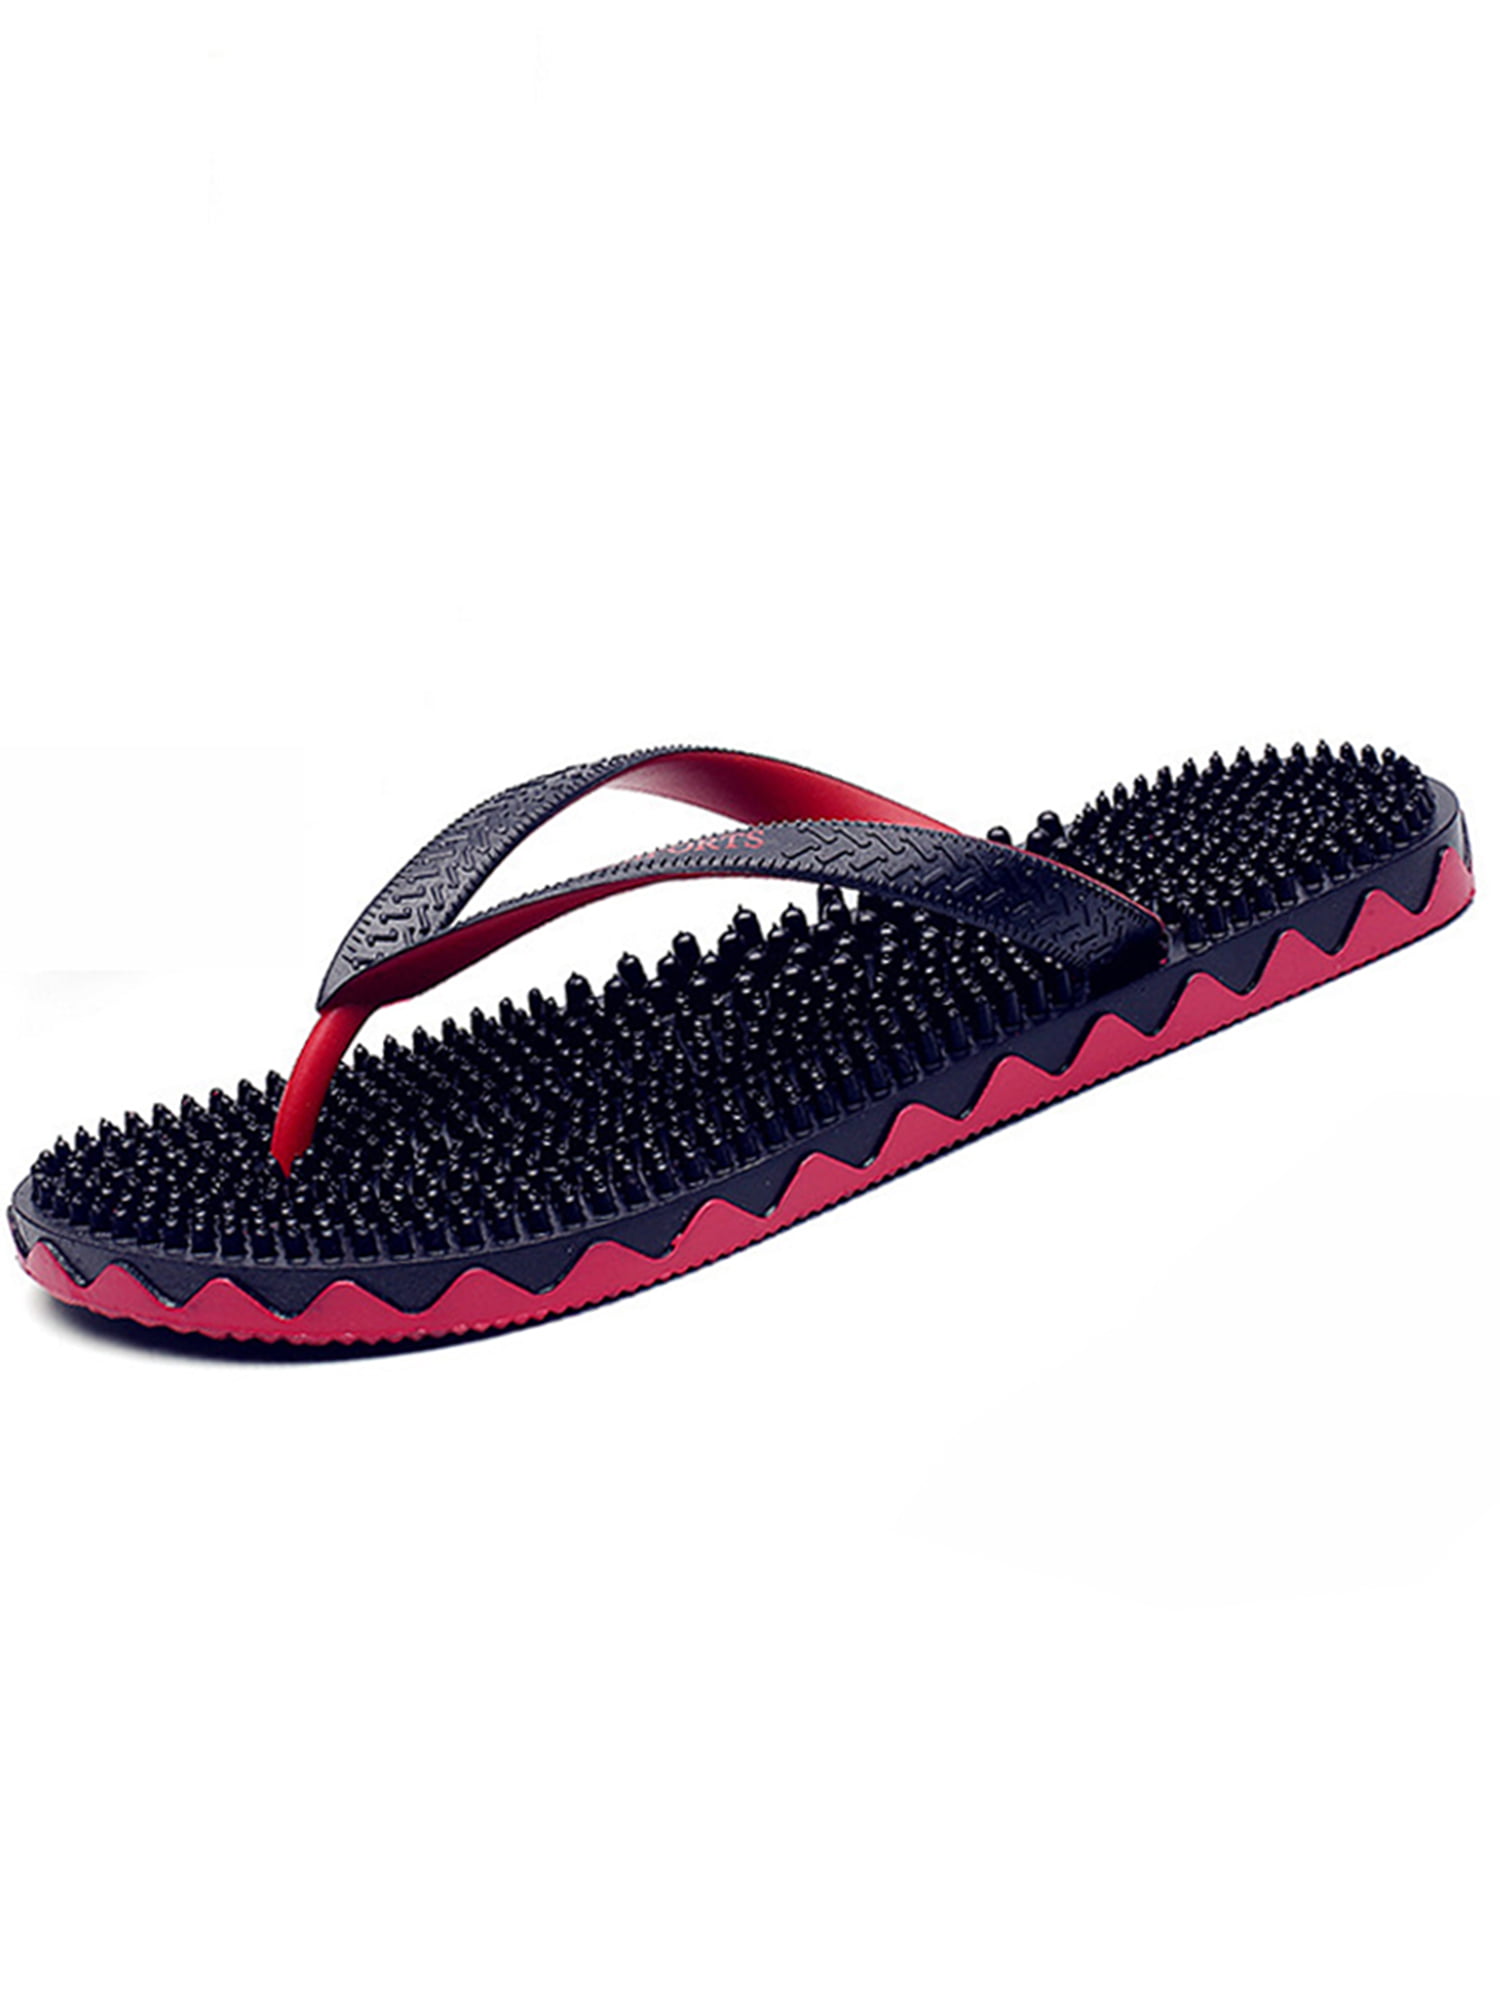 HOBULL Mens Beach Slippers Flip-Flops Light Weight Thong Sandals Massage Sole Non-Slip 